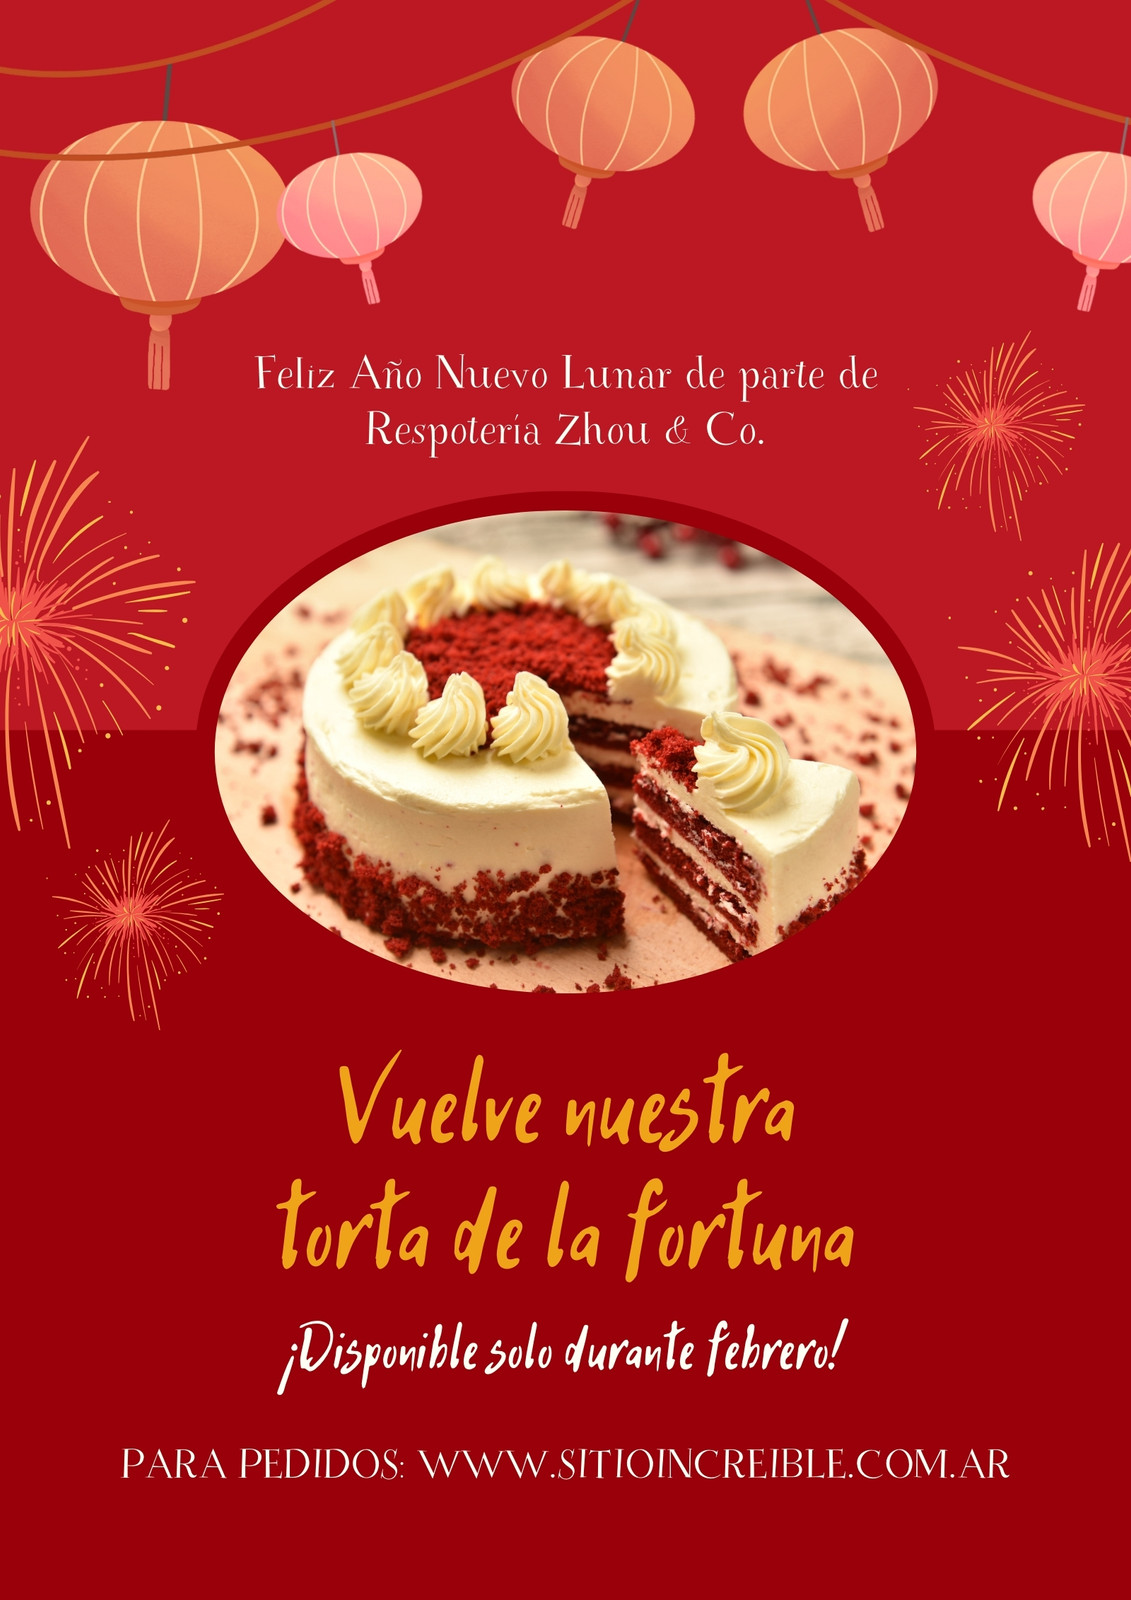 Dessert flyer design with macarons cake tart Vector Image